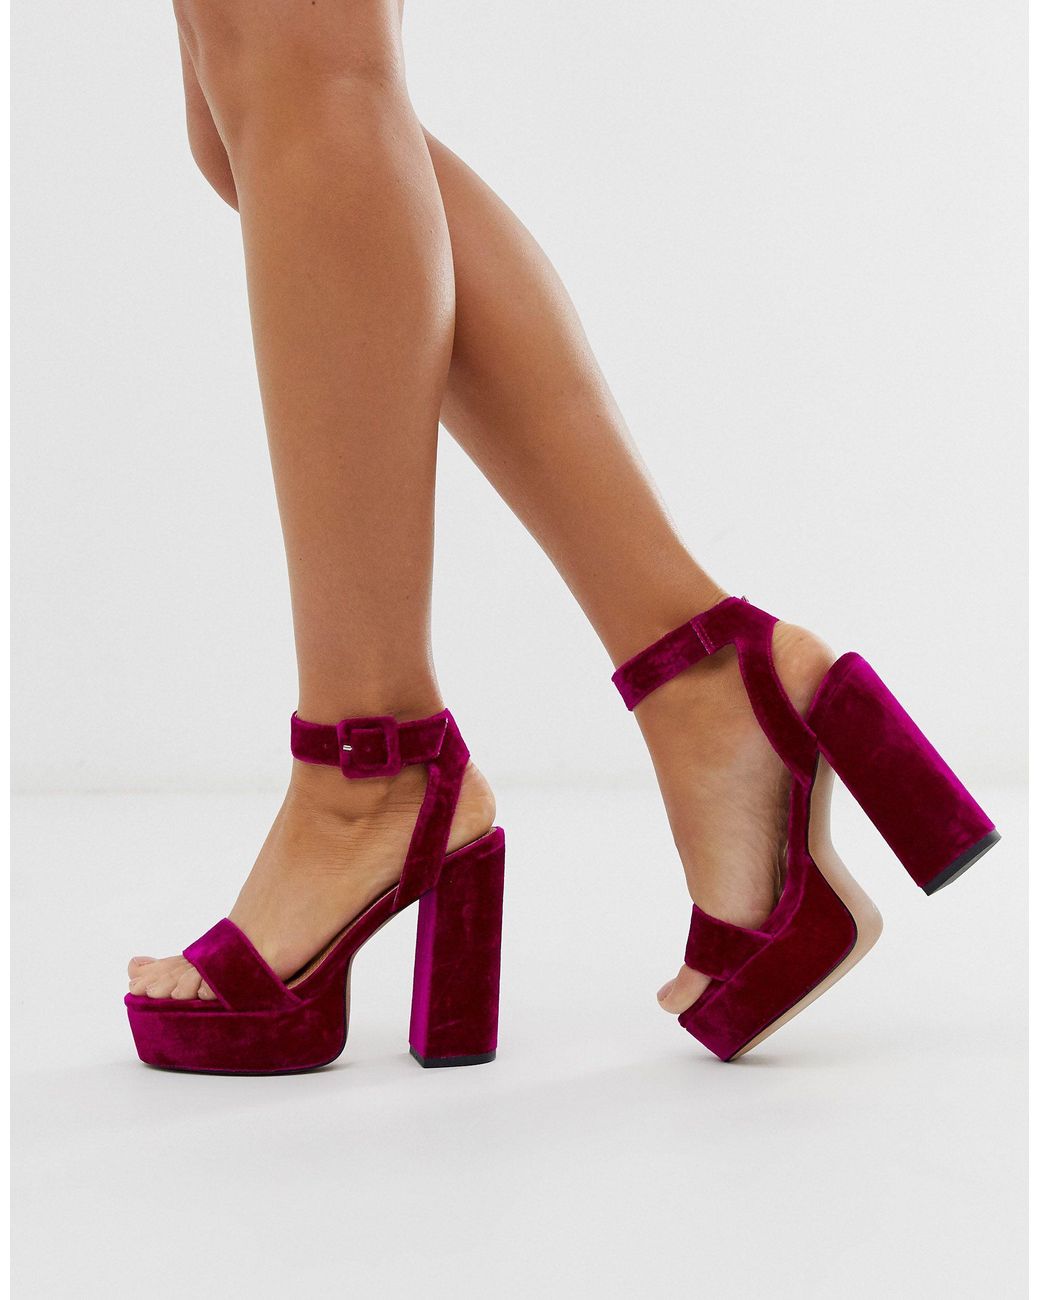 Jessica Simpson Solena T-Strap Platform Heels Magenta Size 8 BNIB | eBay